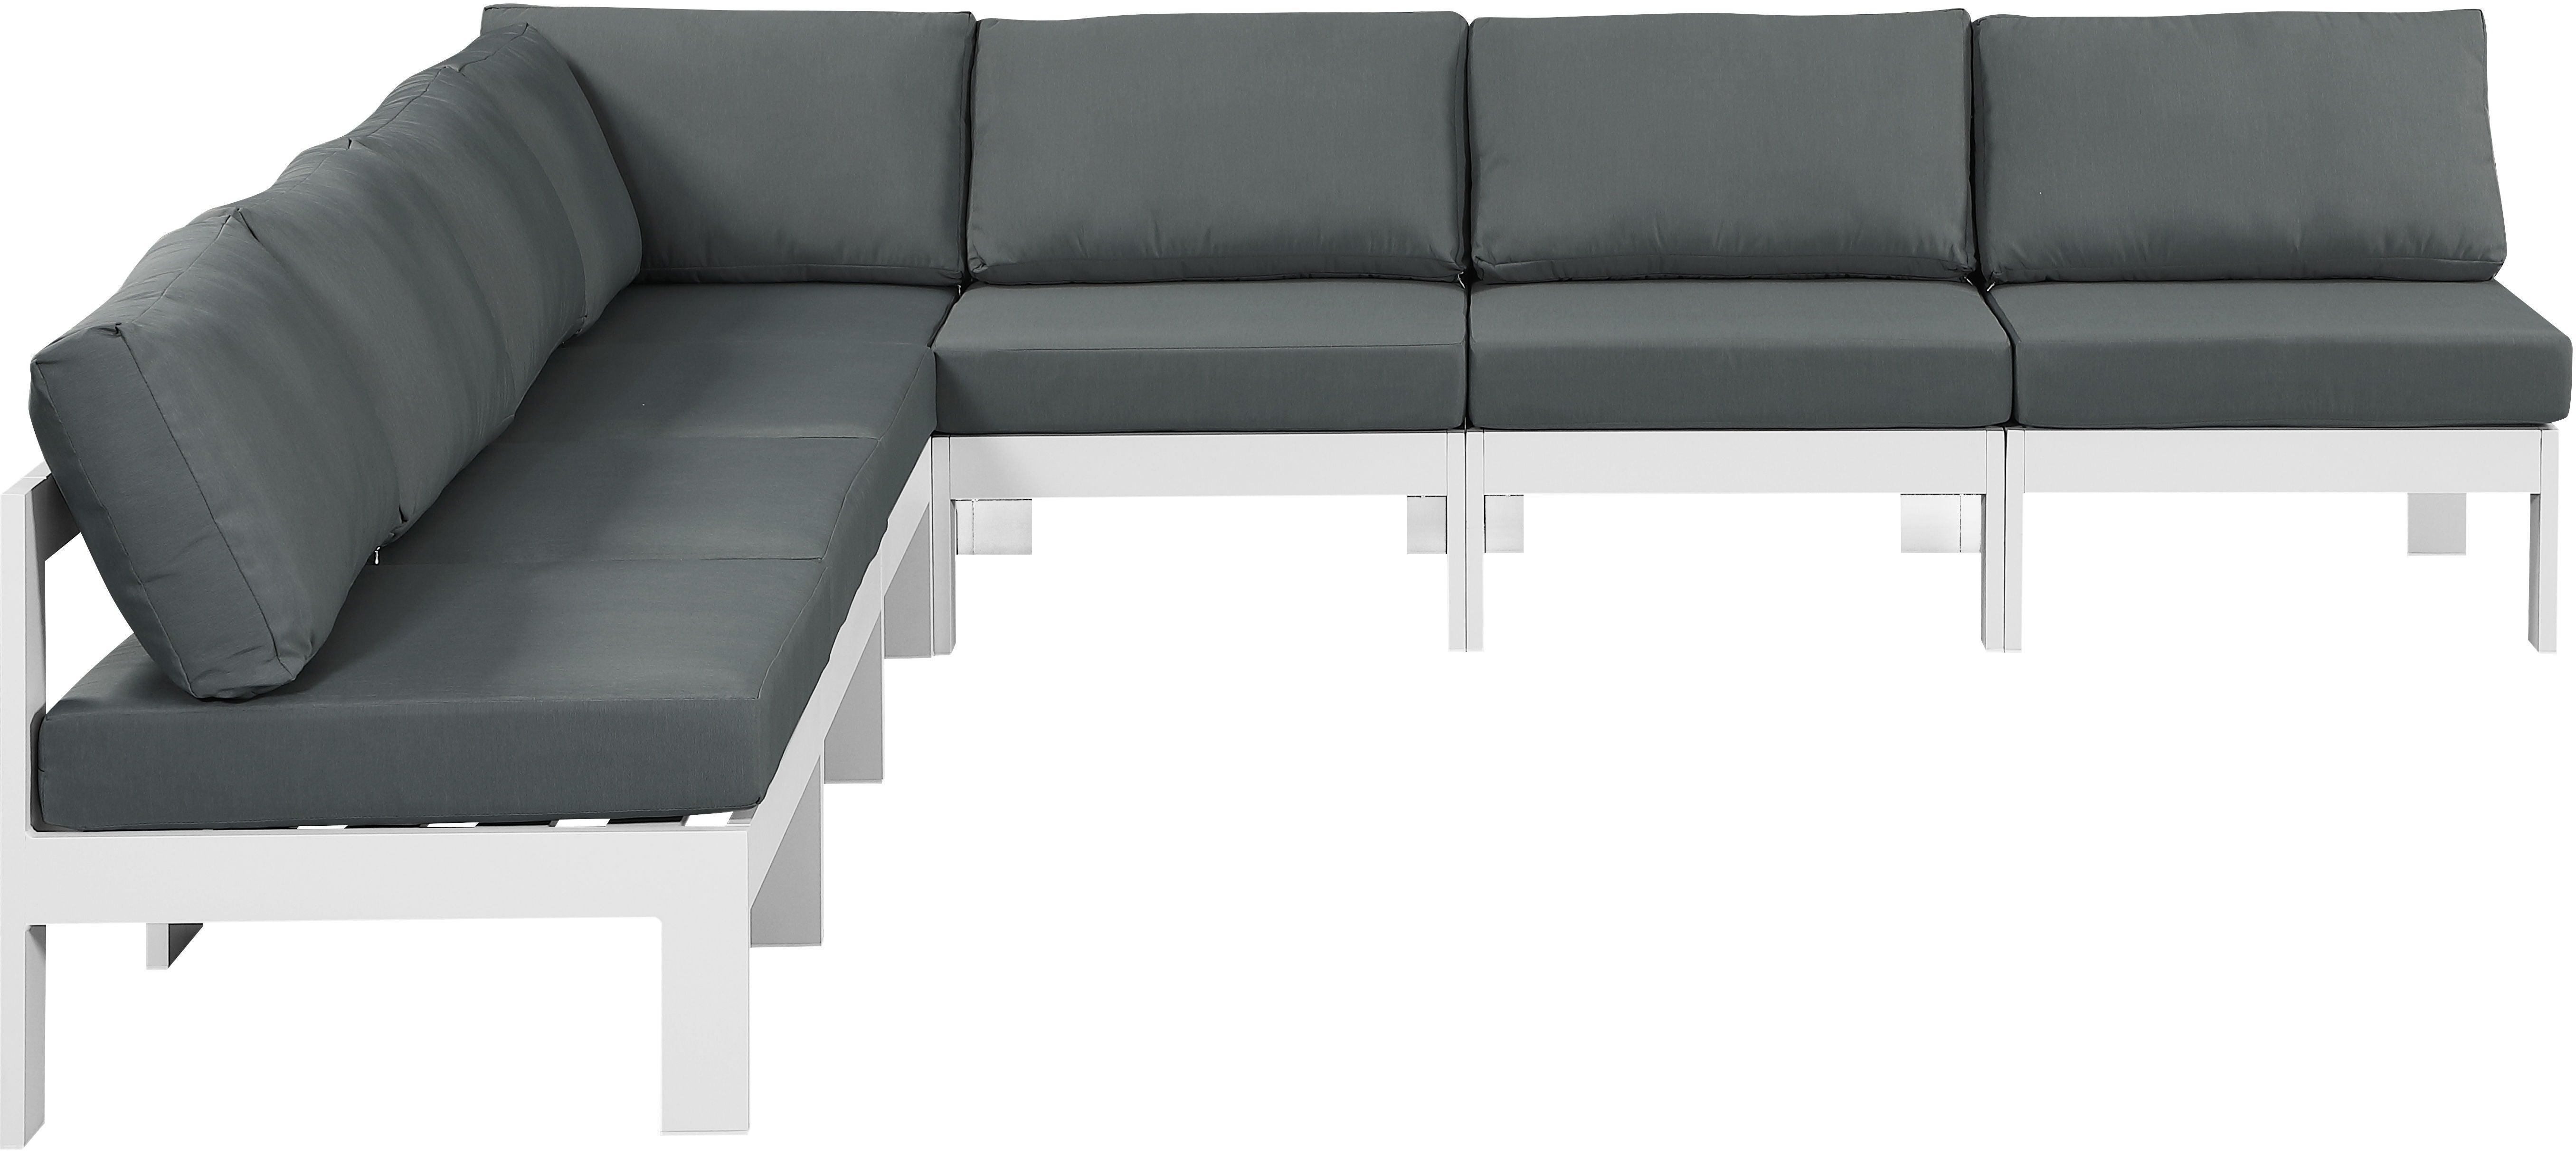 Meridian Furniture - Nizuc - Outdoor Patio Modular Sectional 7 Piece - Grey - Fabric - 5th Avenue Furniture